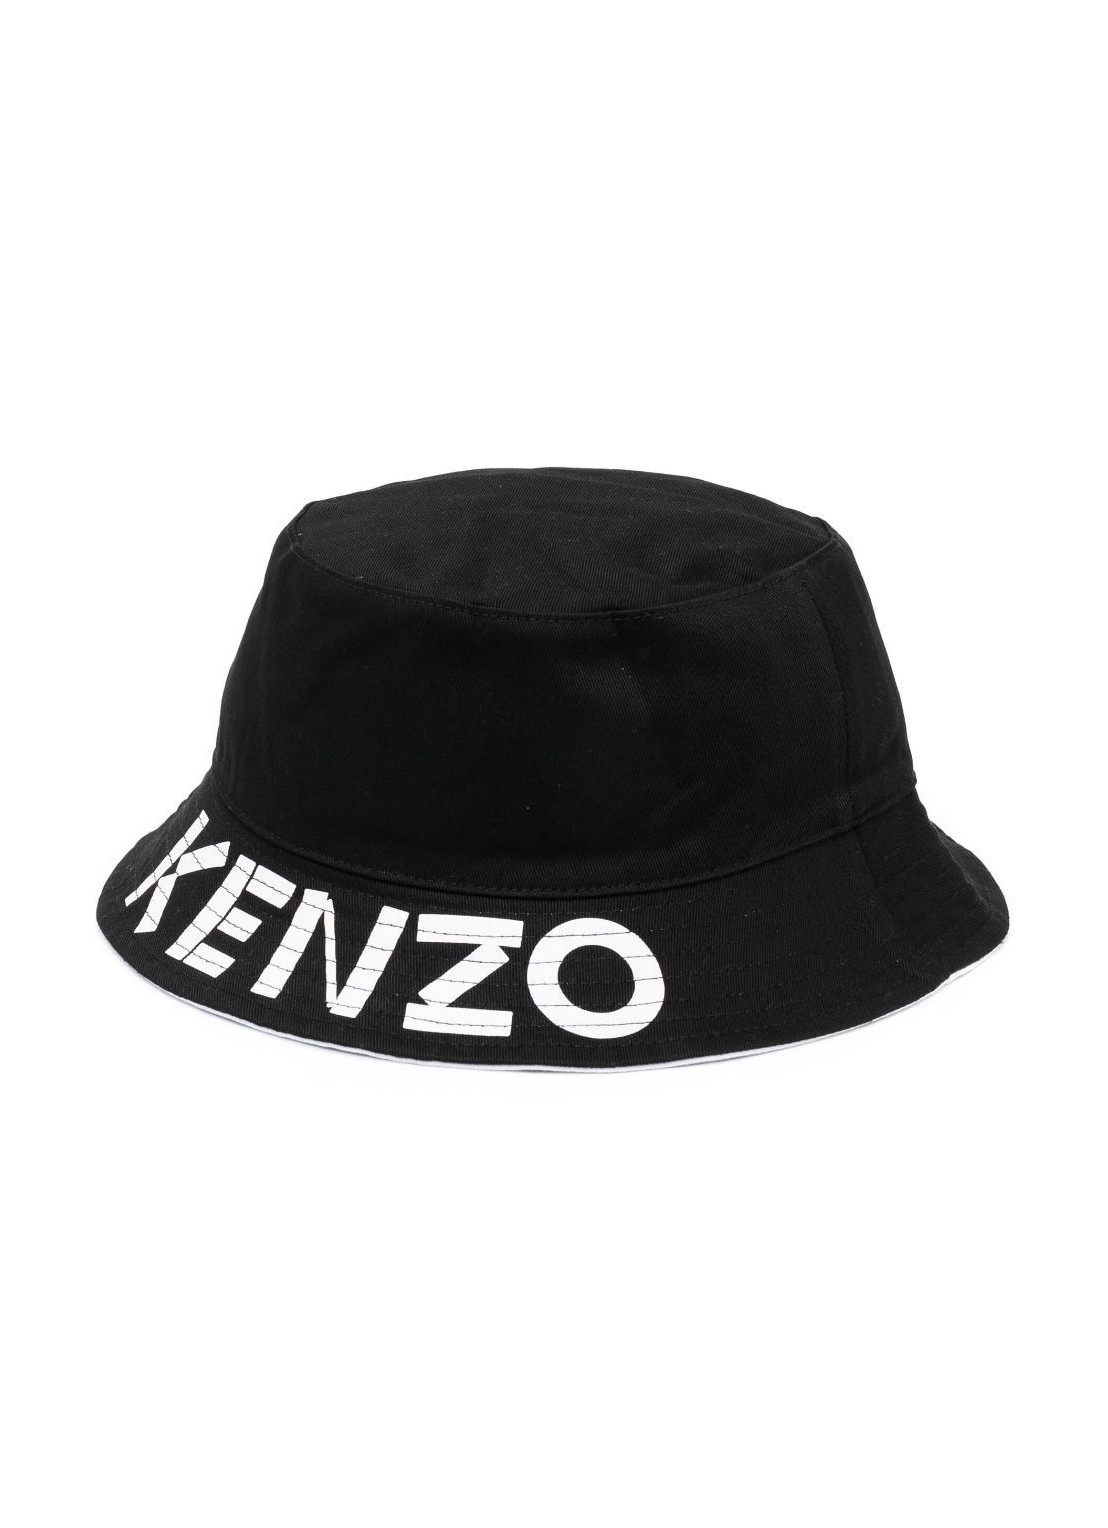 Gorras kenzo cap man bucket hat reversible fd65ac104f31 99 talla negro
 